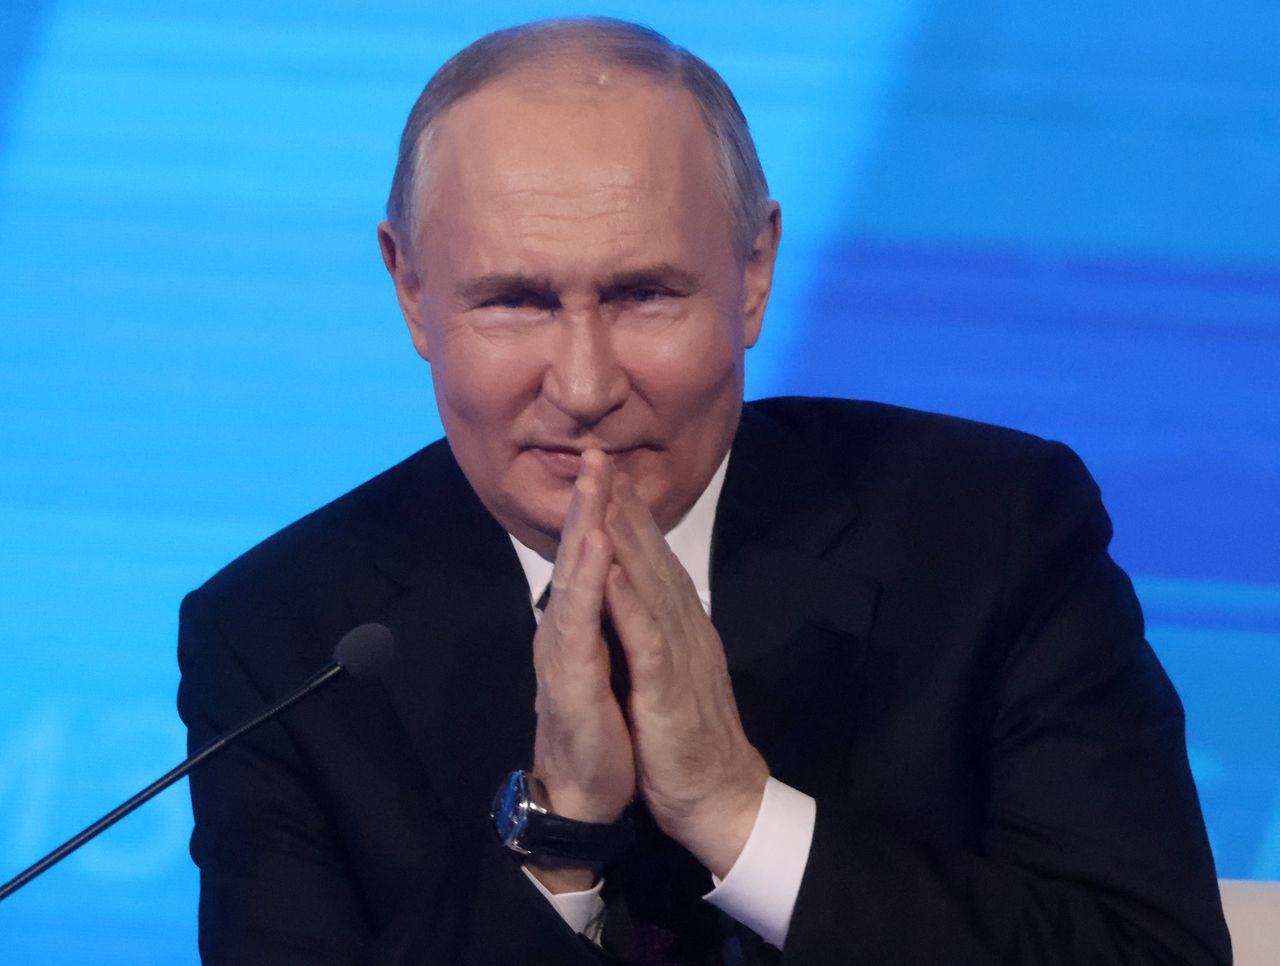 Putin pledges to "restore order" in annexed Ukrainian regions